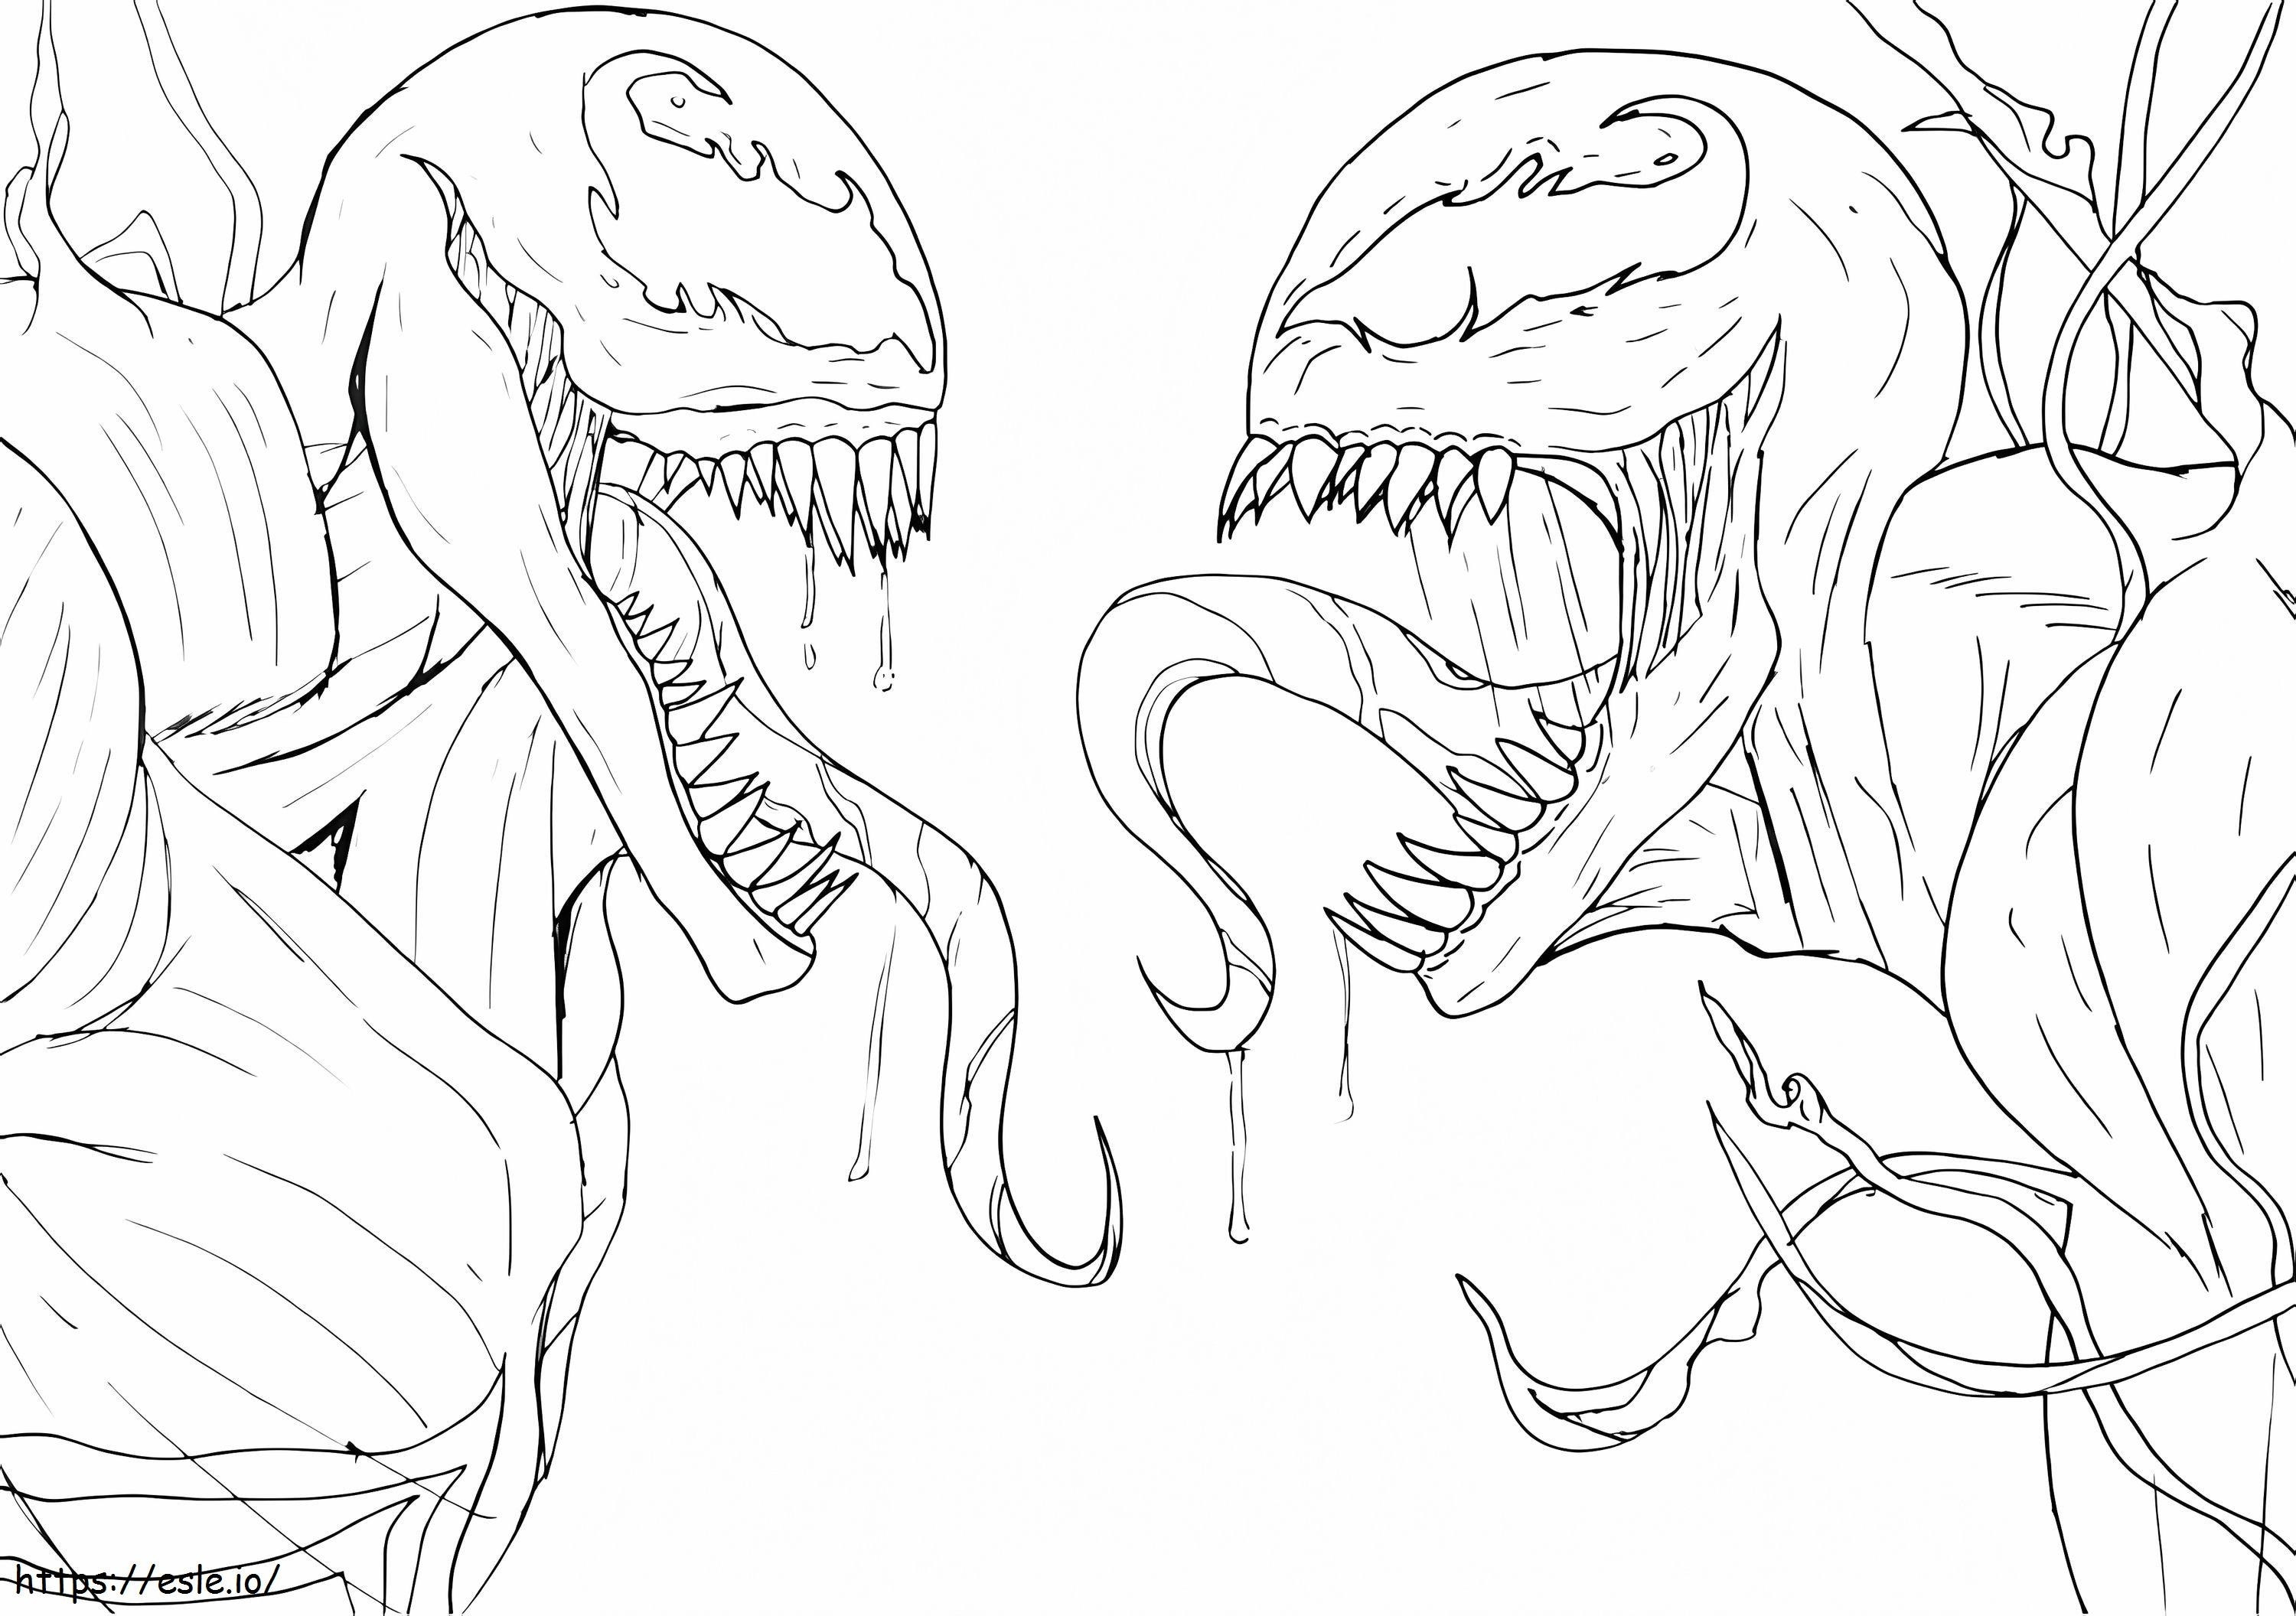 Carnage vs. Venom ausmalbilder